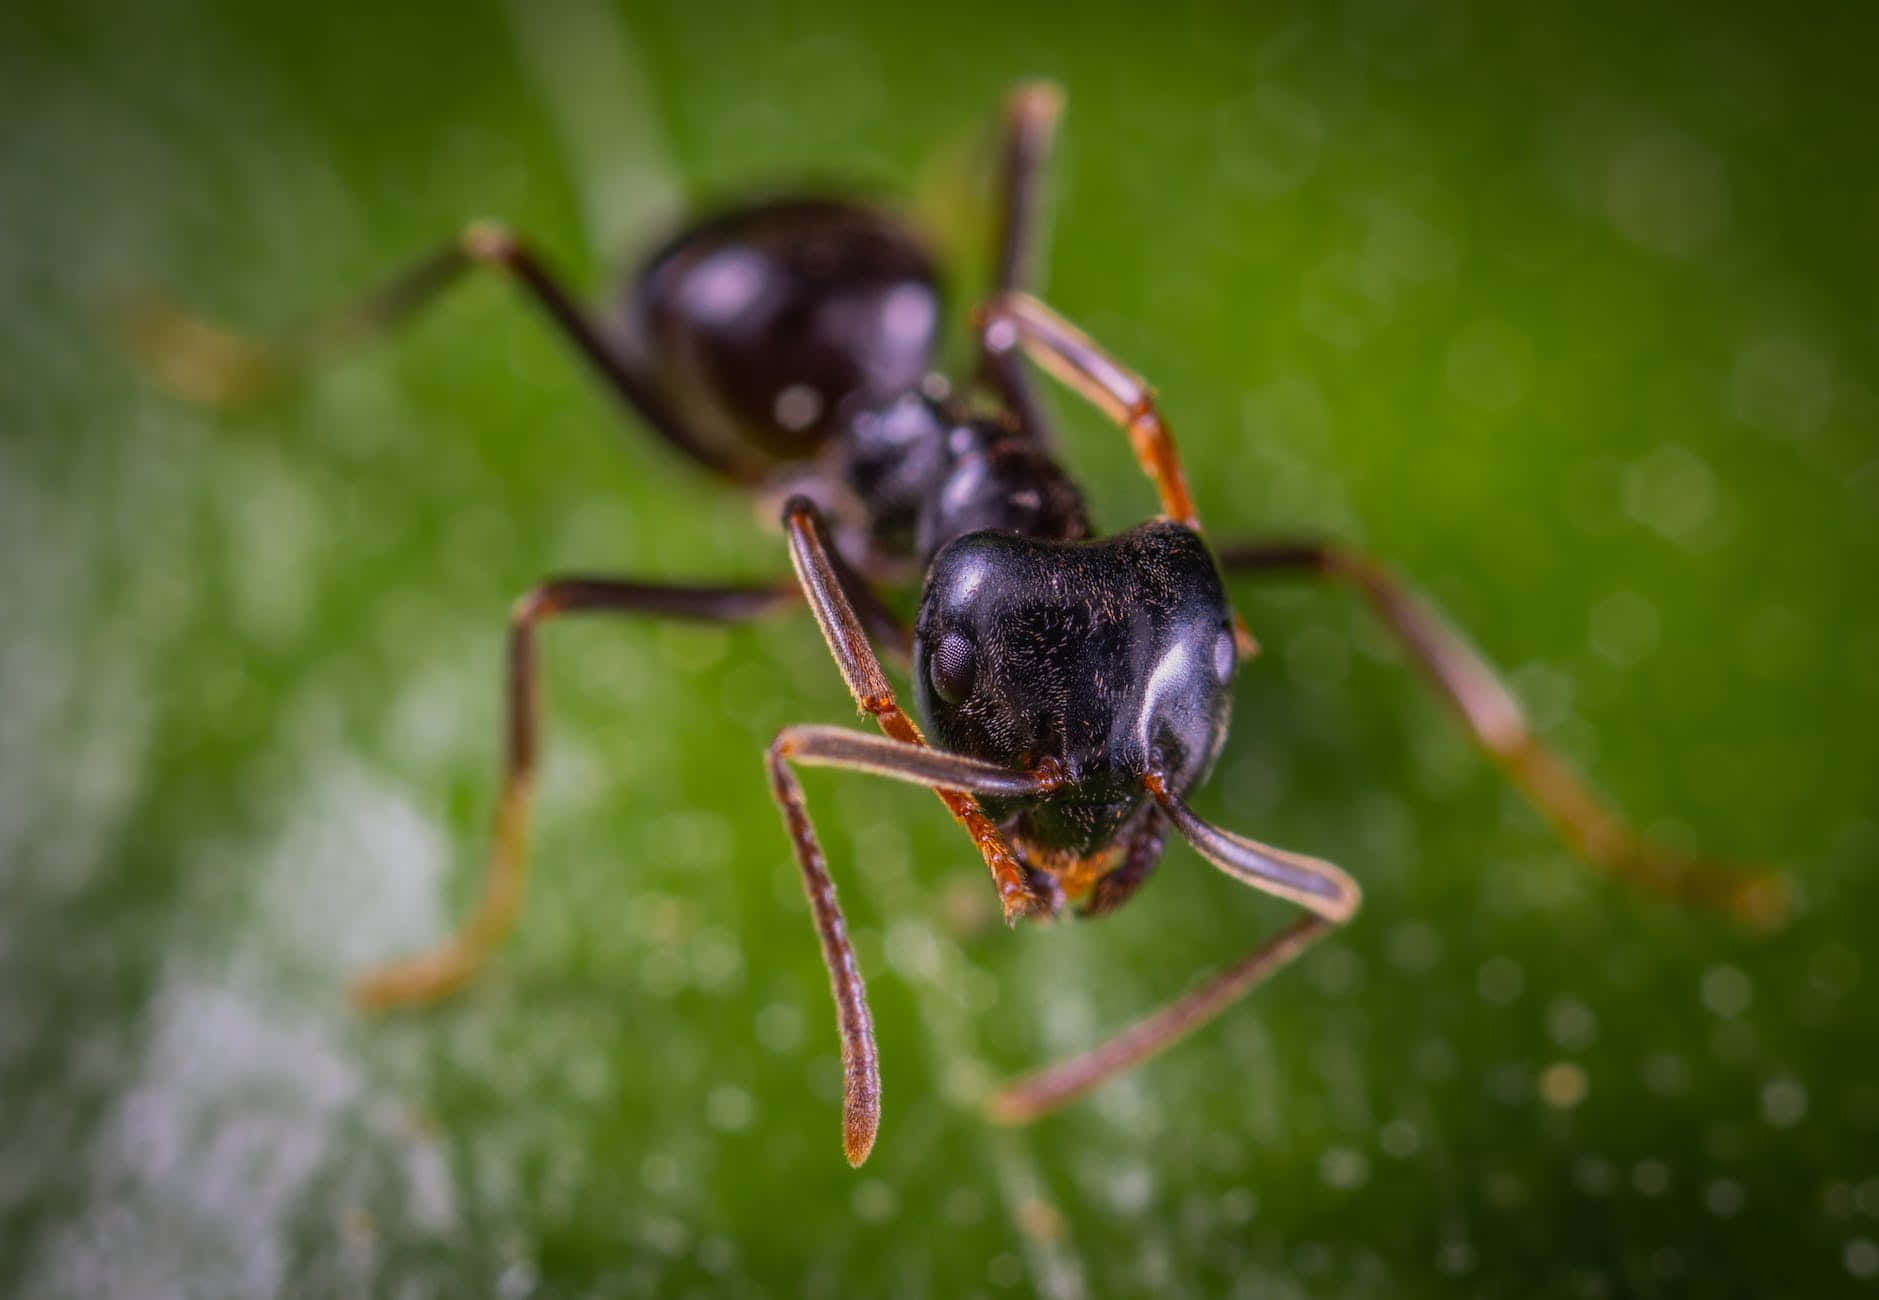 A tiny ant exploring the world